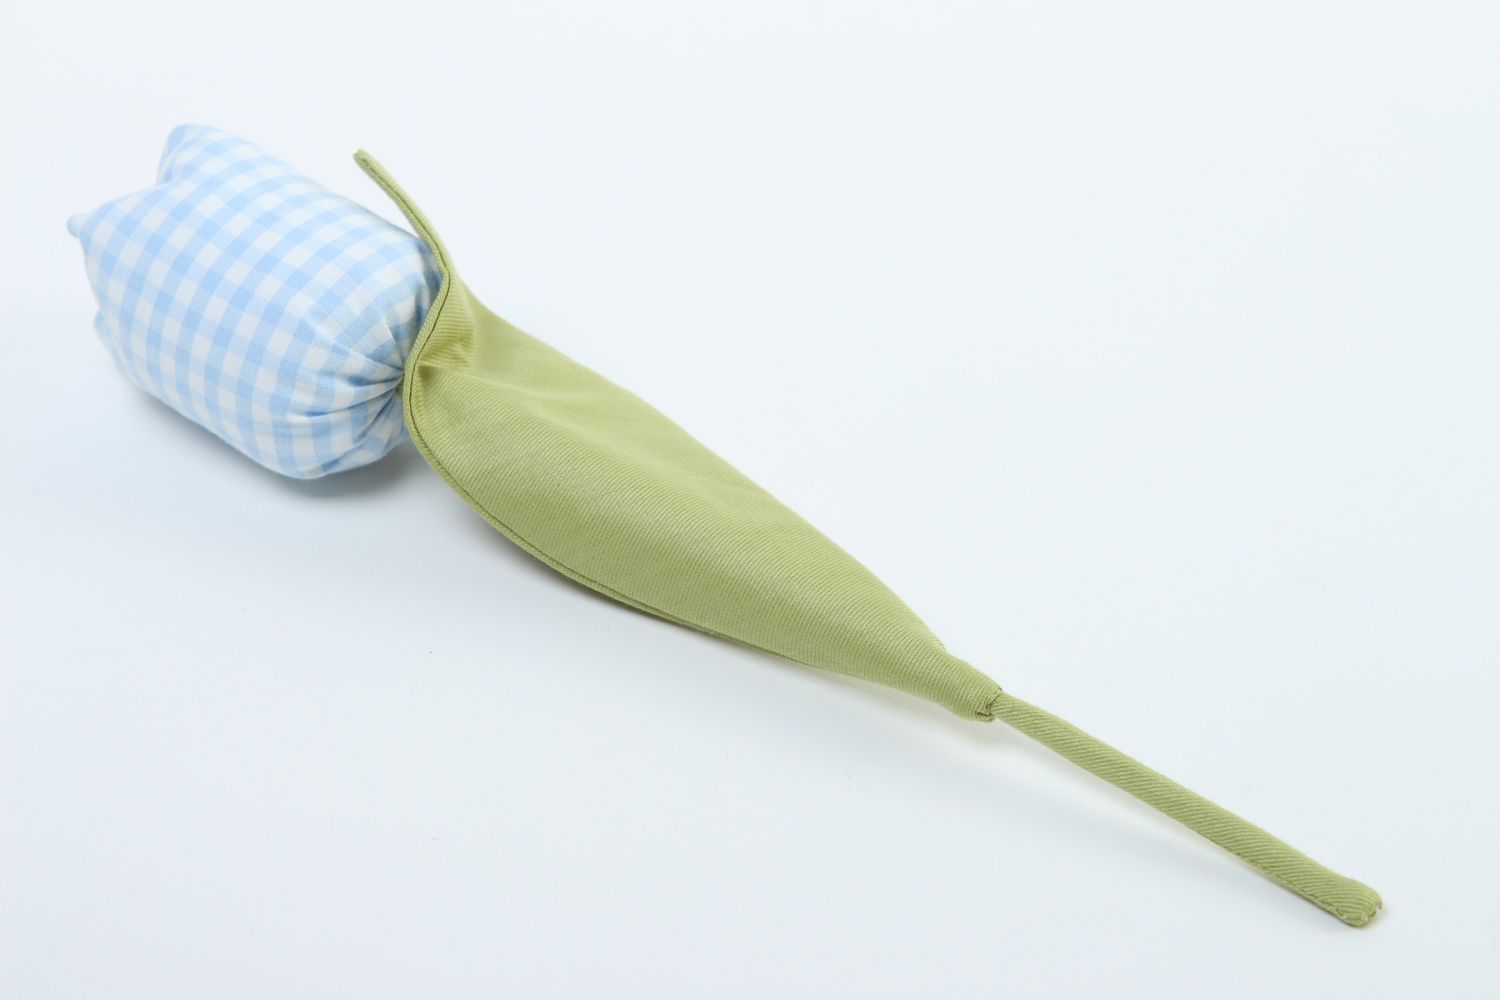 Unusual handmade fabric flower tulip soft flower gift ideas decorative use only photo 4